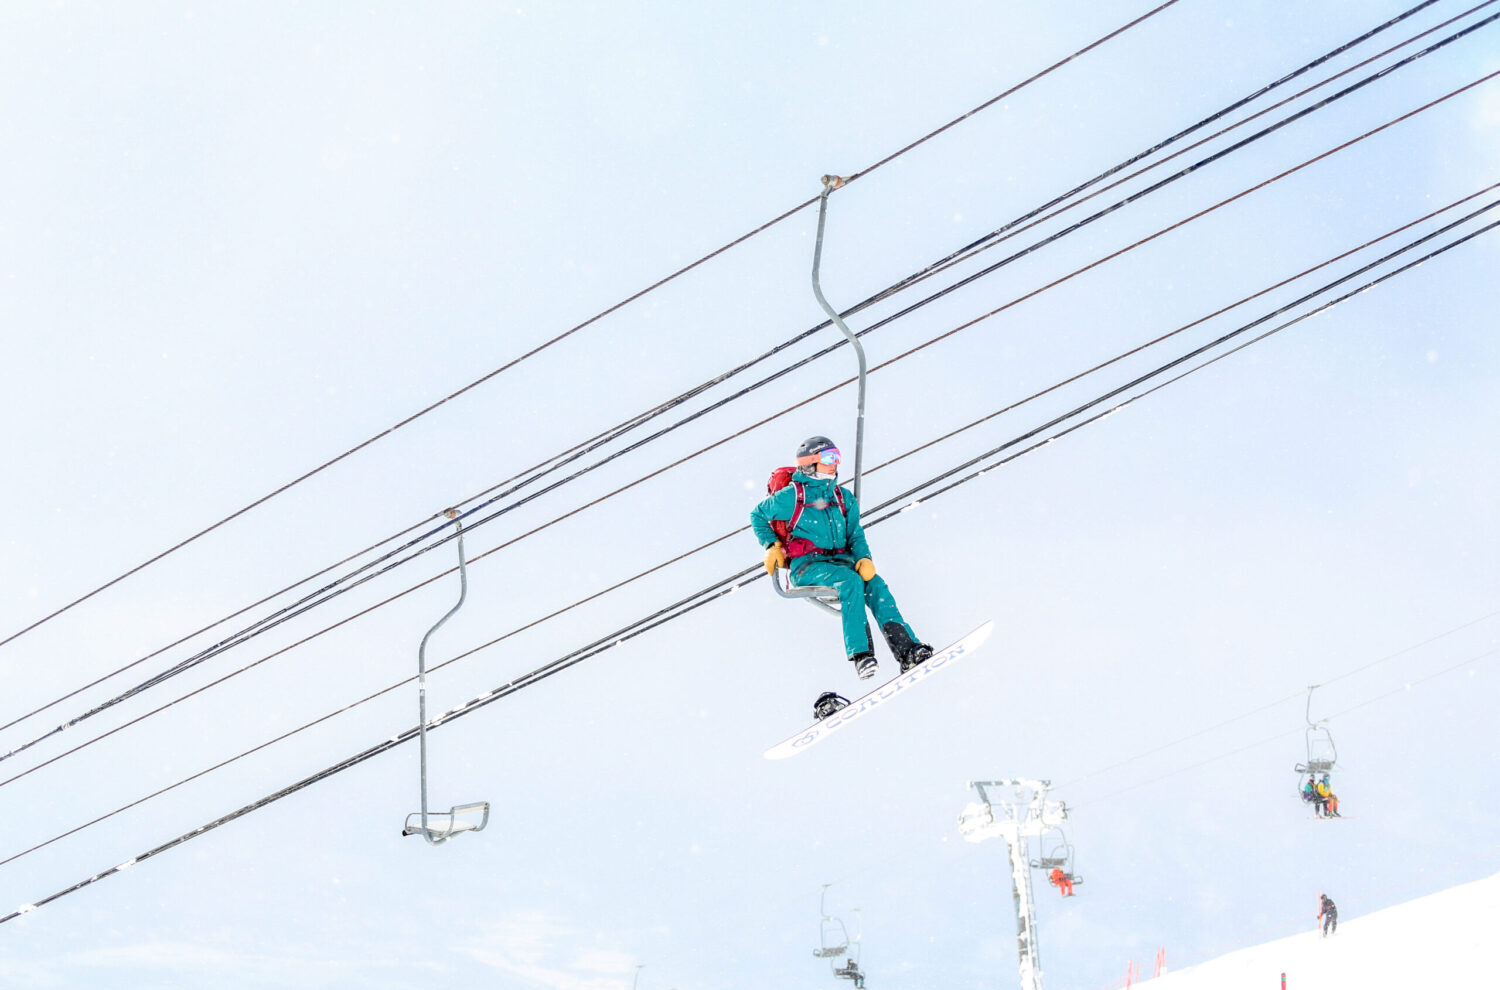 Jen snowboarding on a “Far Out” trip this year in Hokkaido, Japan (photo by Jacinta Gordon)